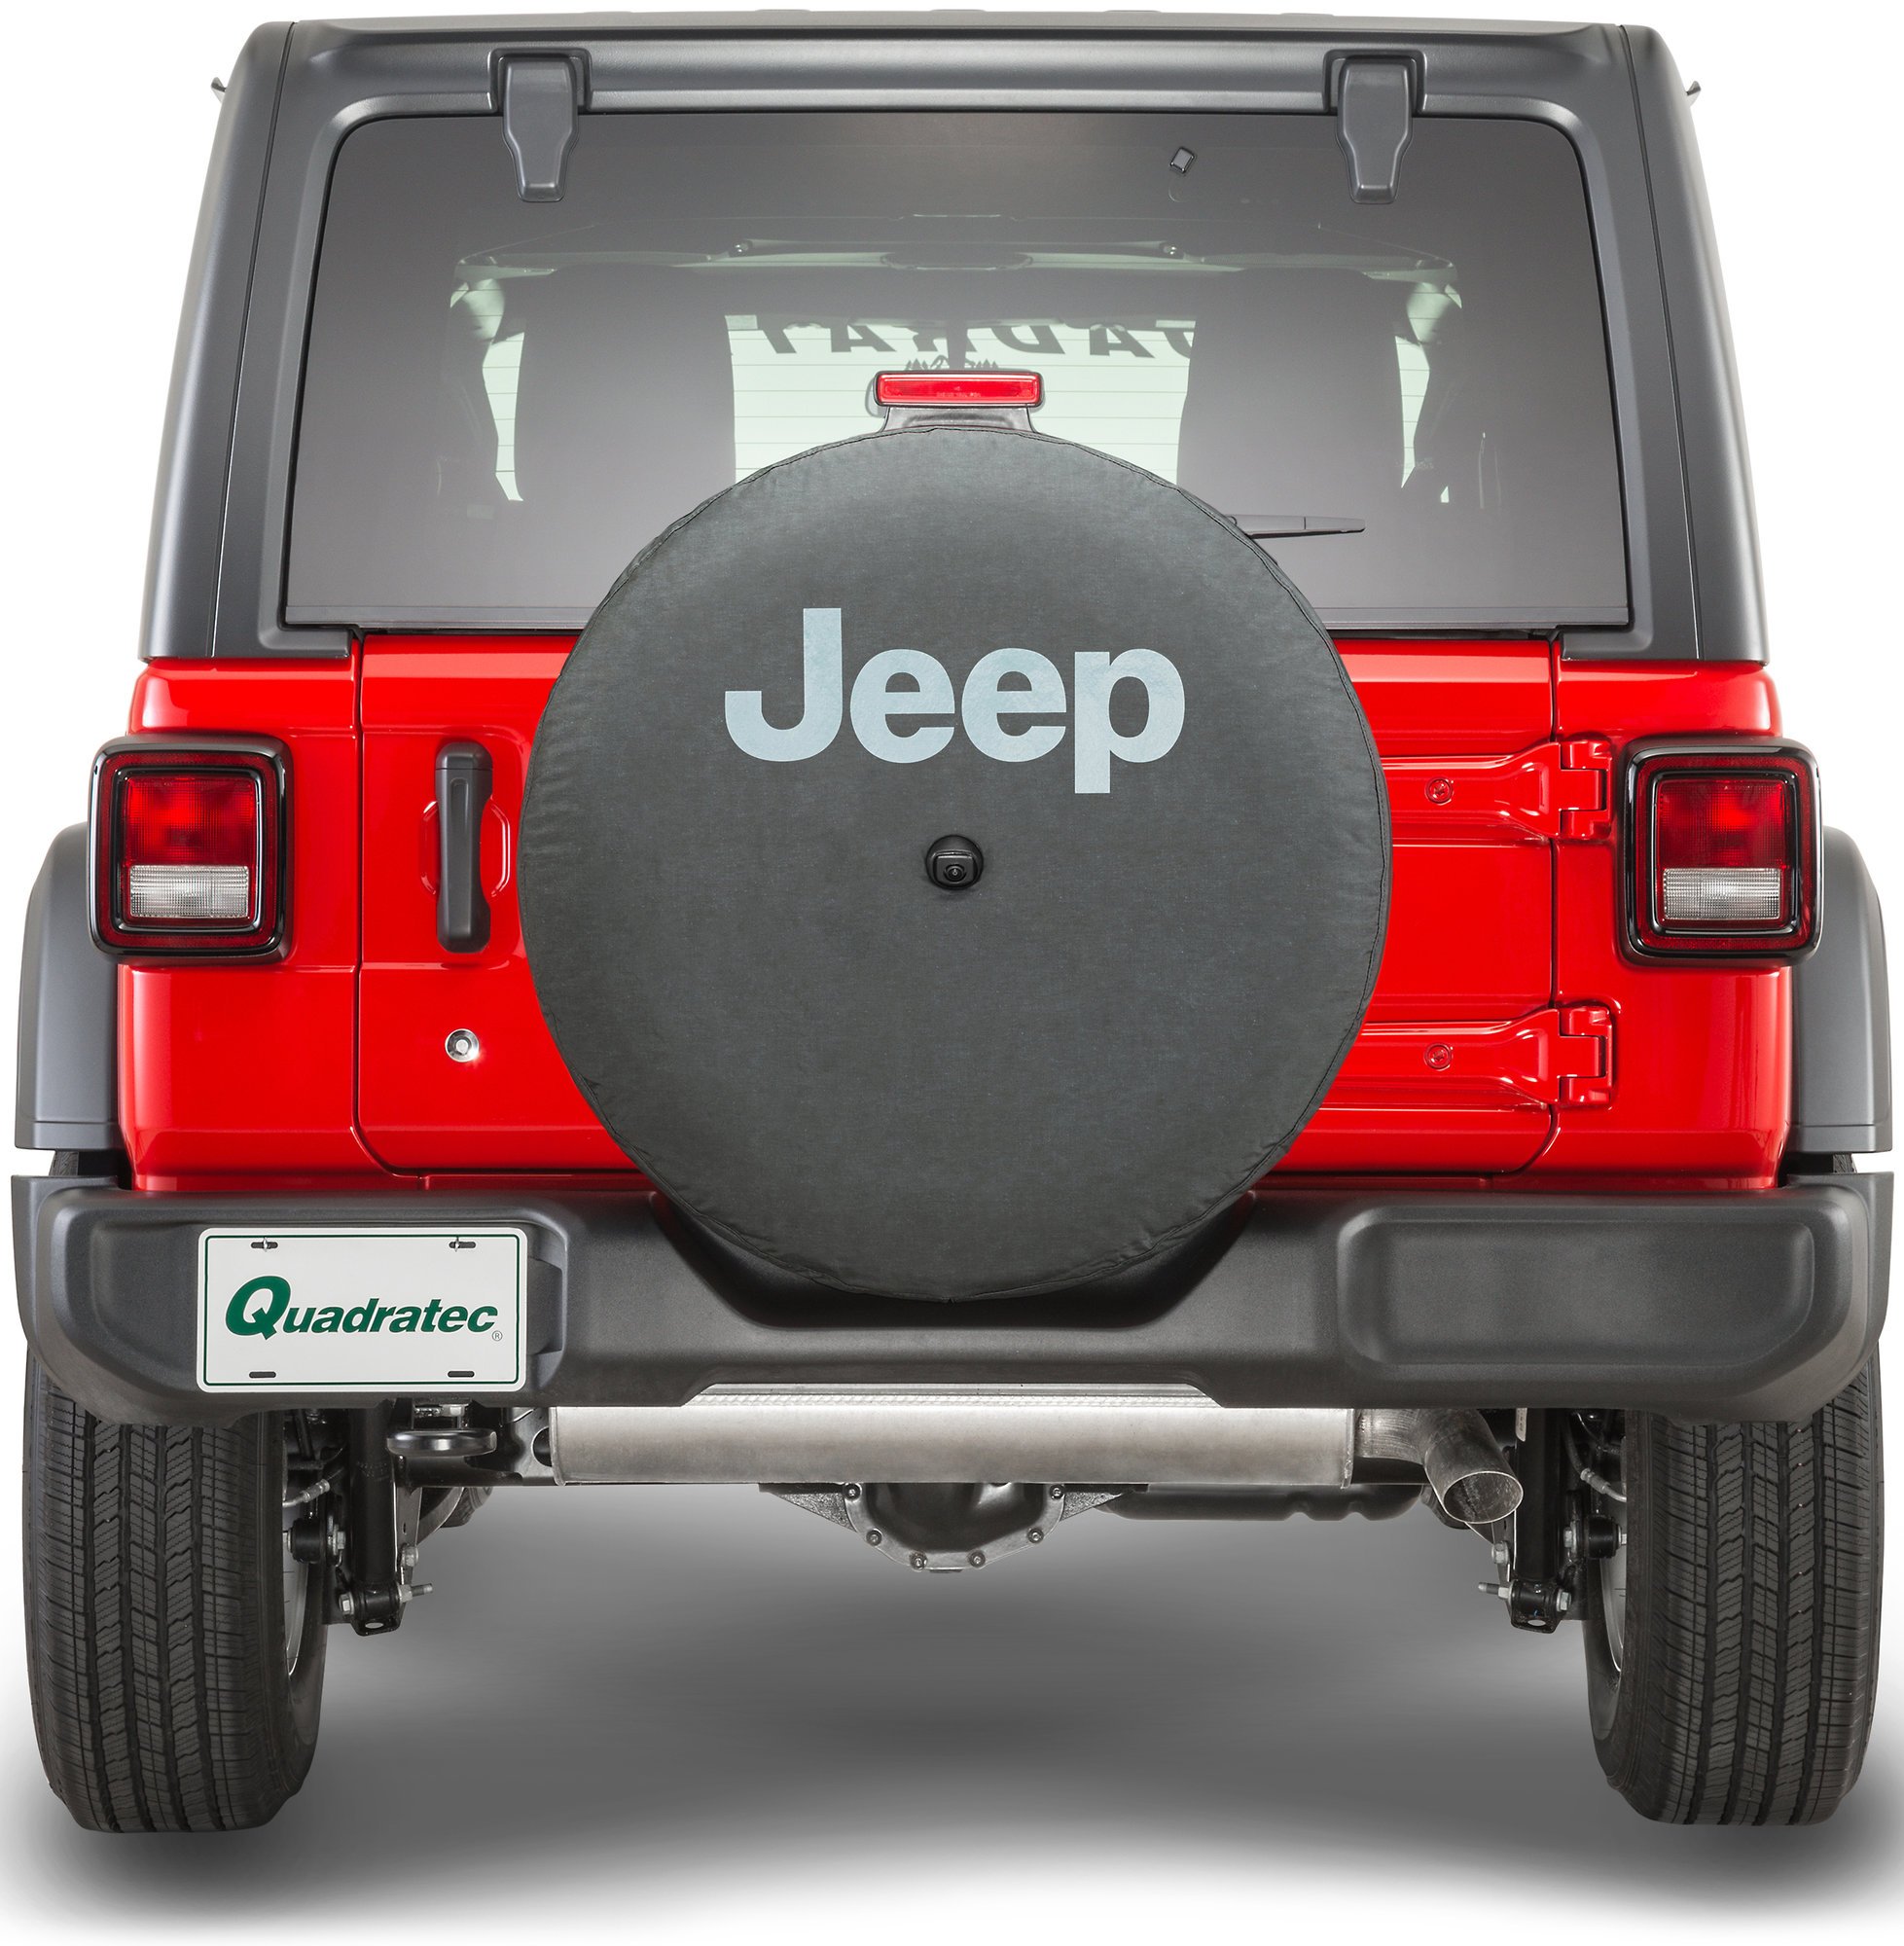 2018-2021 Jeep Wrangler JL Mopar Spare Tire Cover 82215434AB